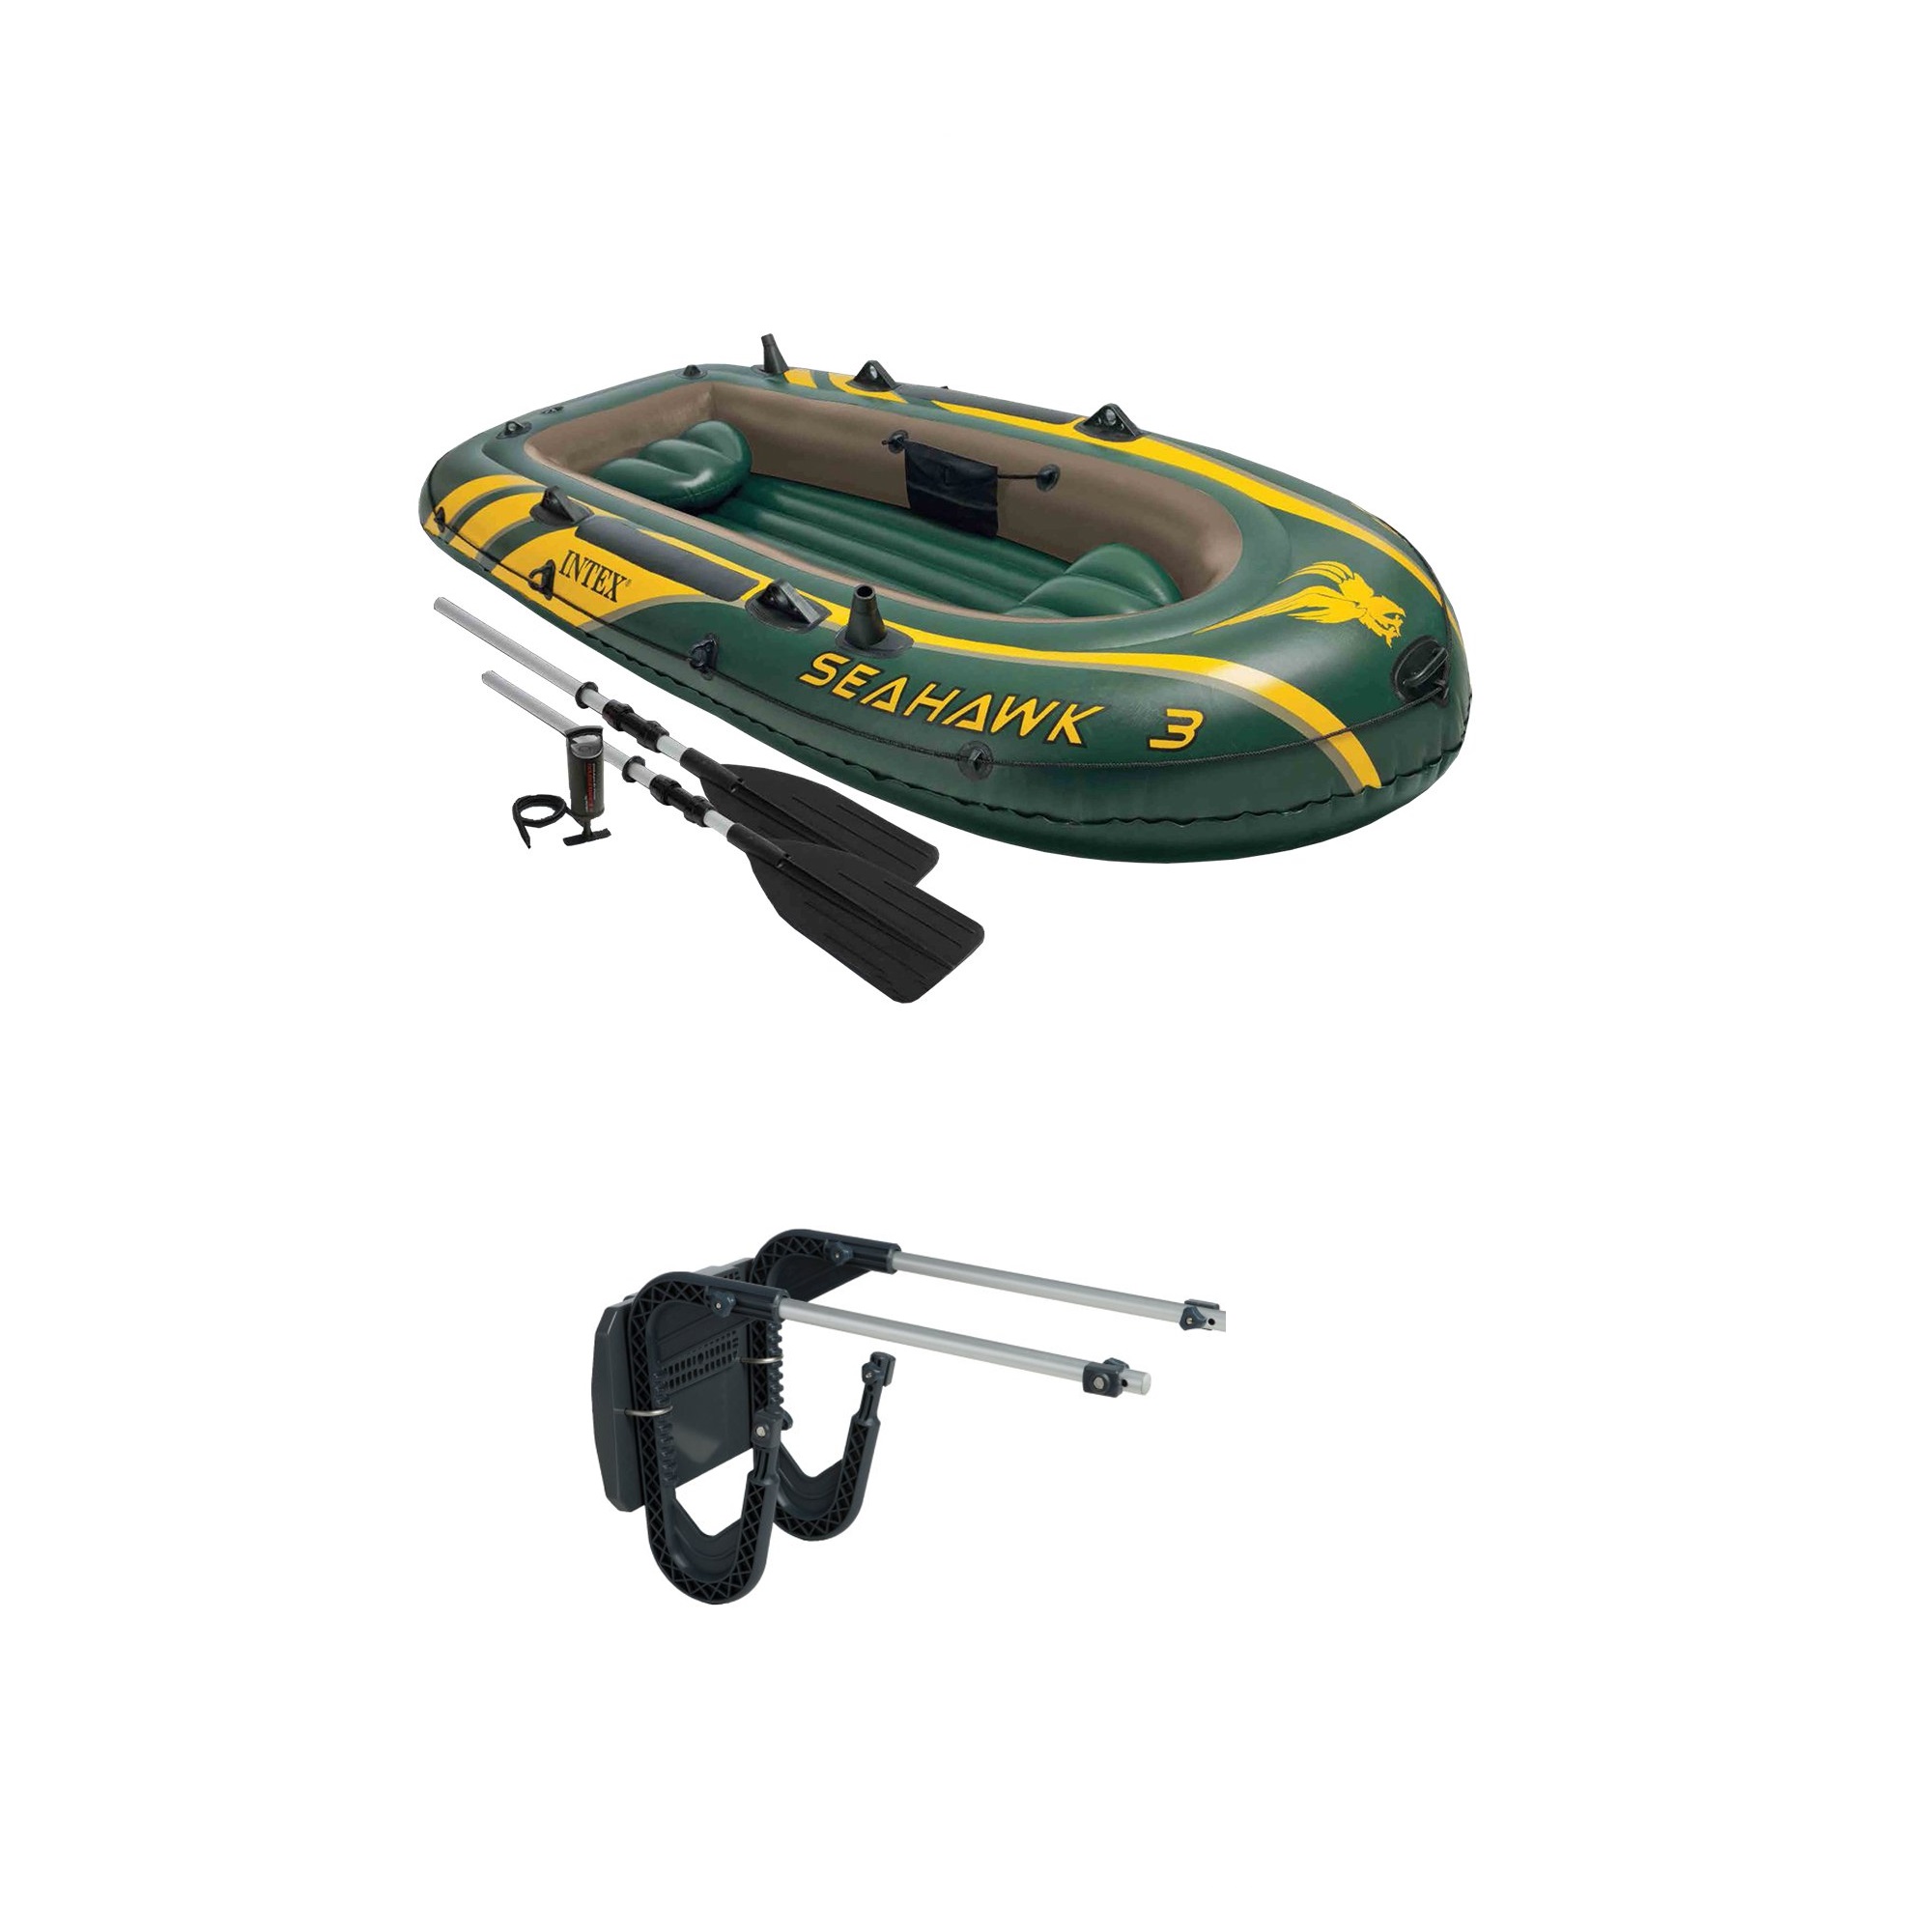 Intex 3 Person Boat Set w/ Aluminum Oars & Pump and Composite Boat Motor Mount - Click1Get2 Price Drop